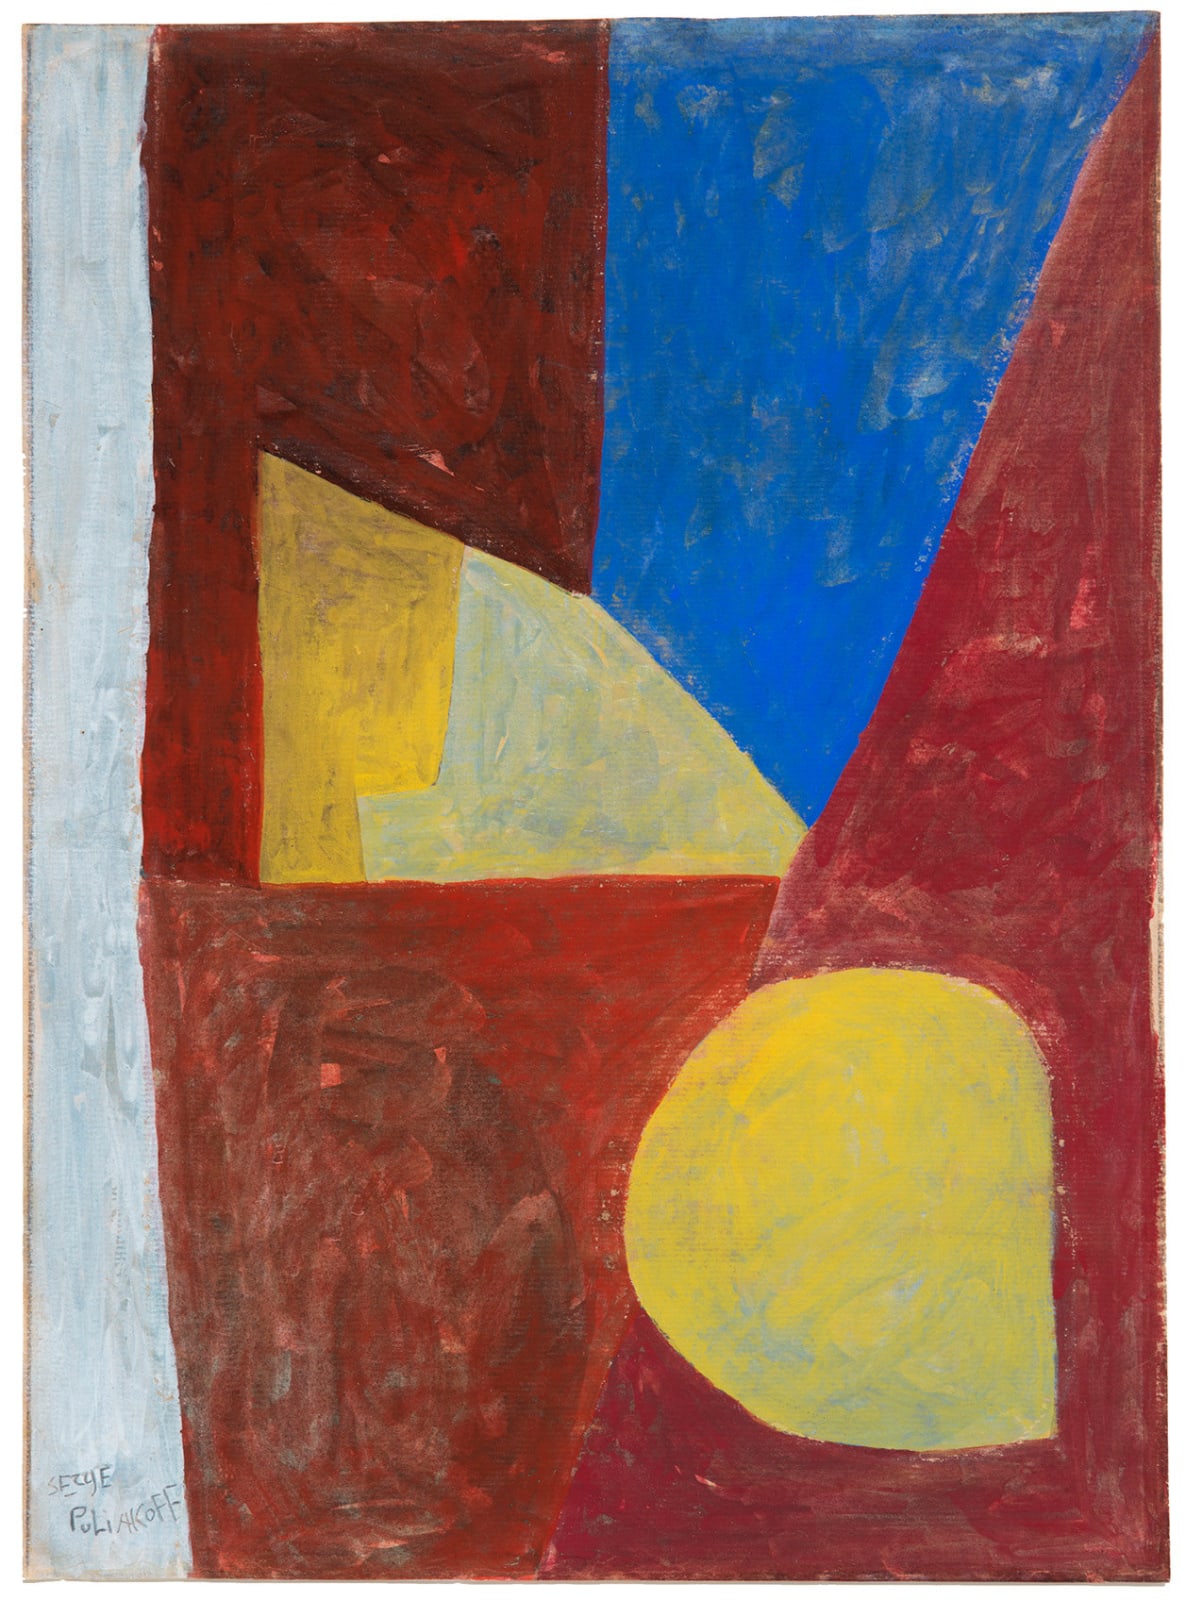 SERGE POLIAKOFF, Composition abstraite, 1954